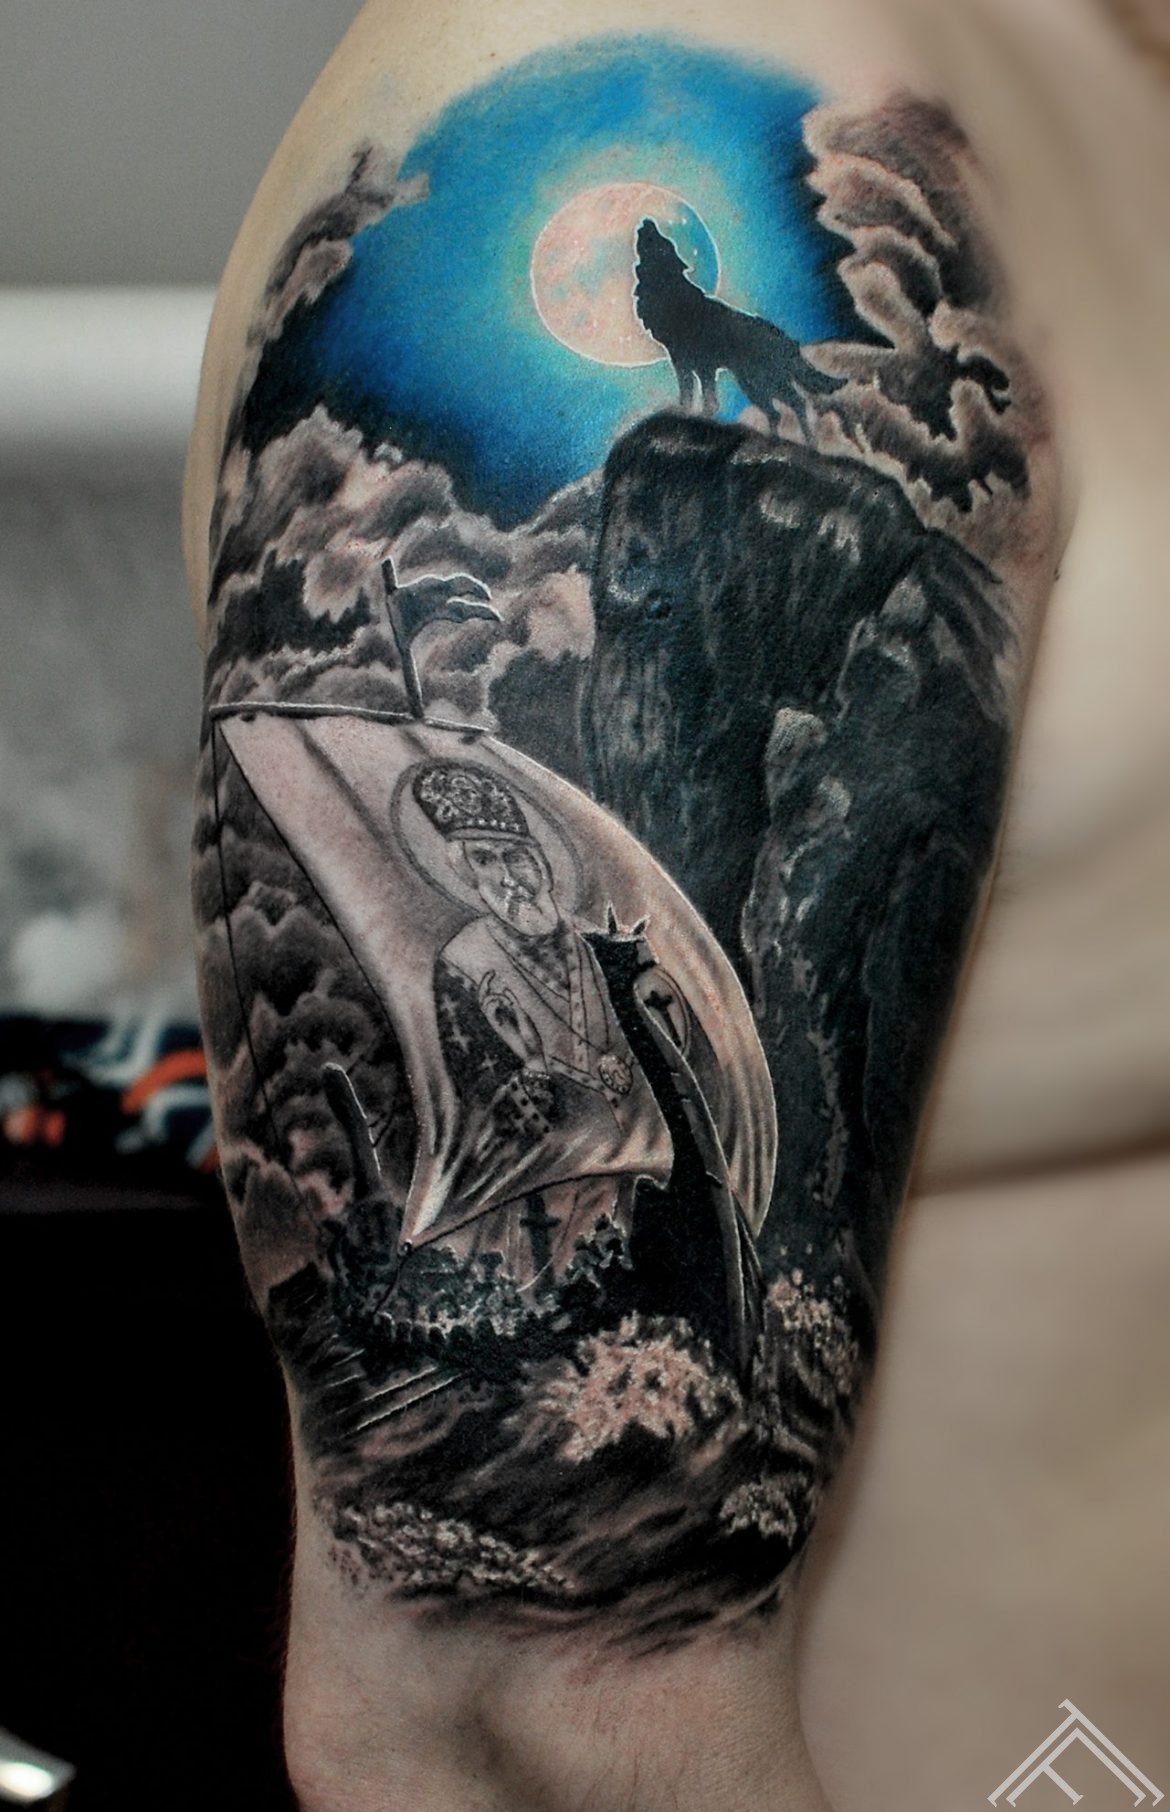 janisanderson-tattoo-ship-warriors-wolf-moon-tattoofrequency-riga